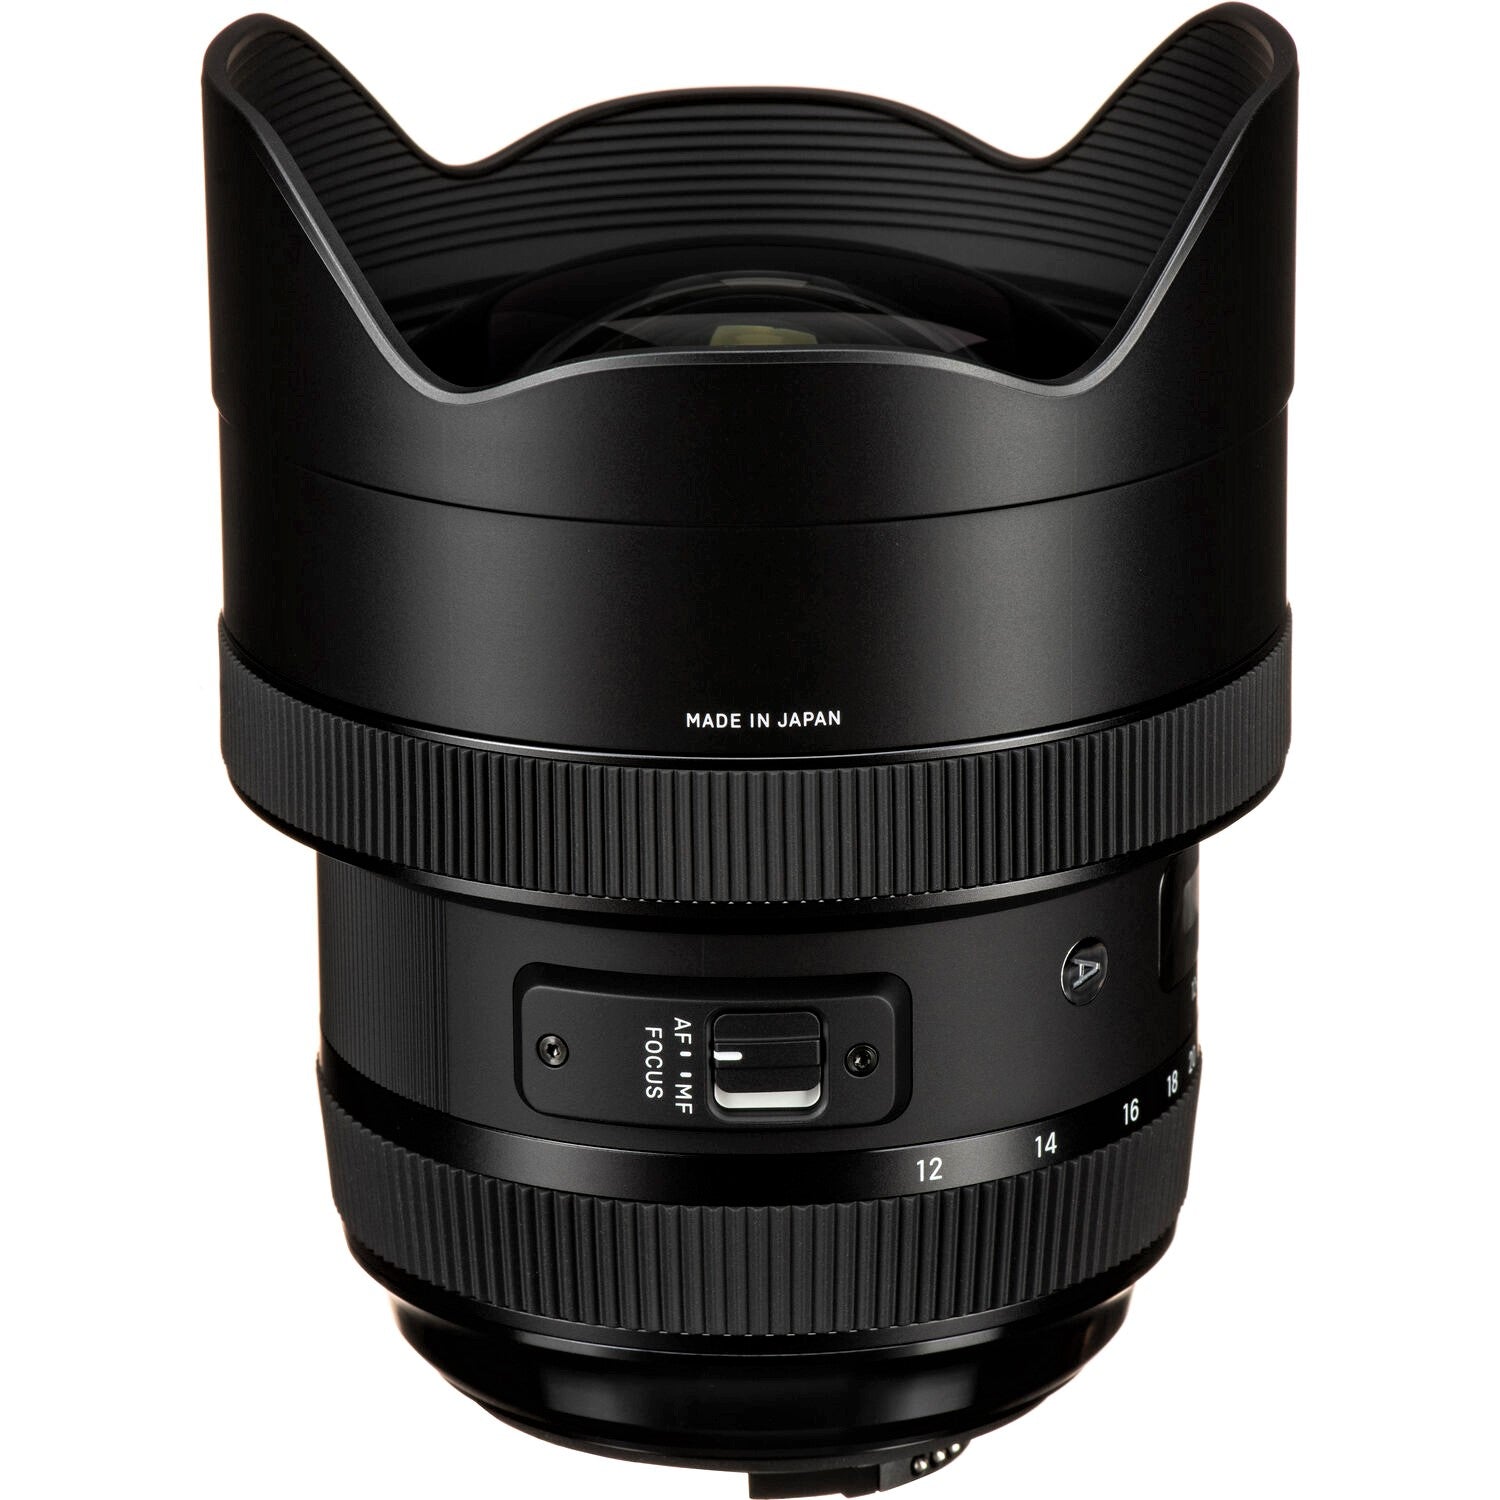 Sigma 12-24mm F4.0 DG HSM Art Lens for Nikon F